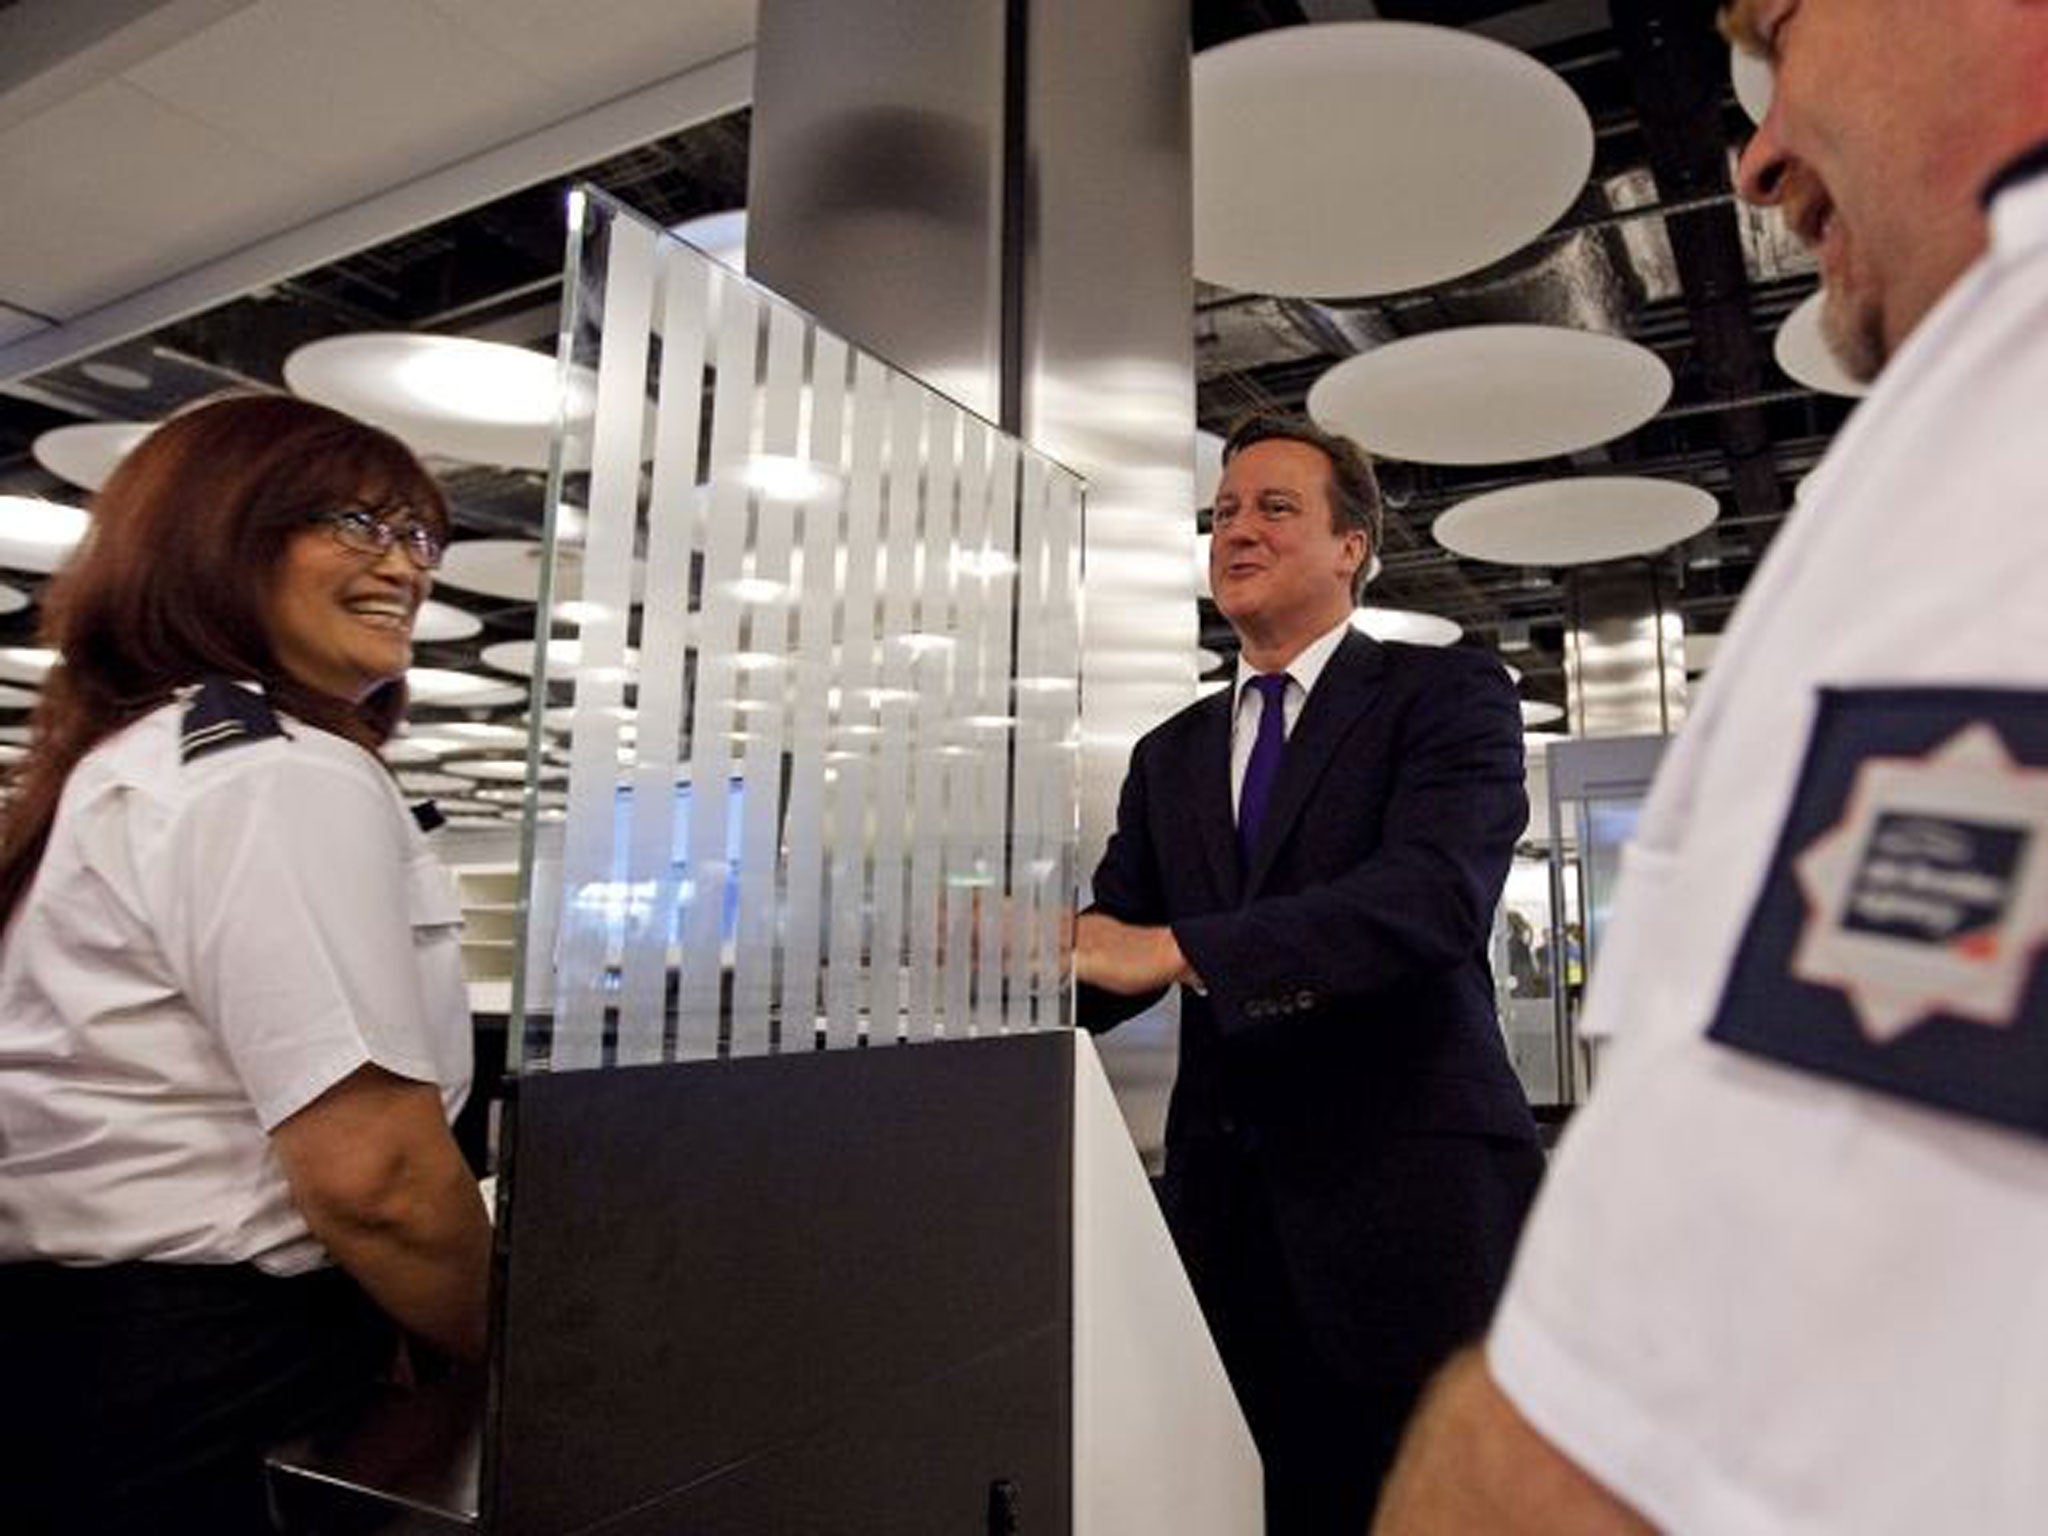 David Cameron with a UK Border Agency official at Heathrow